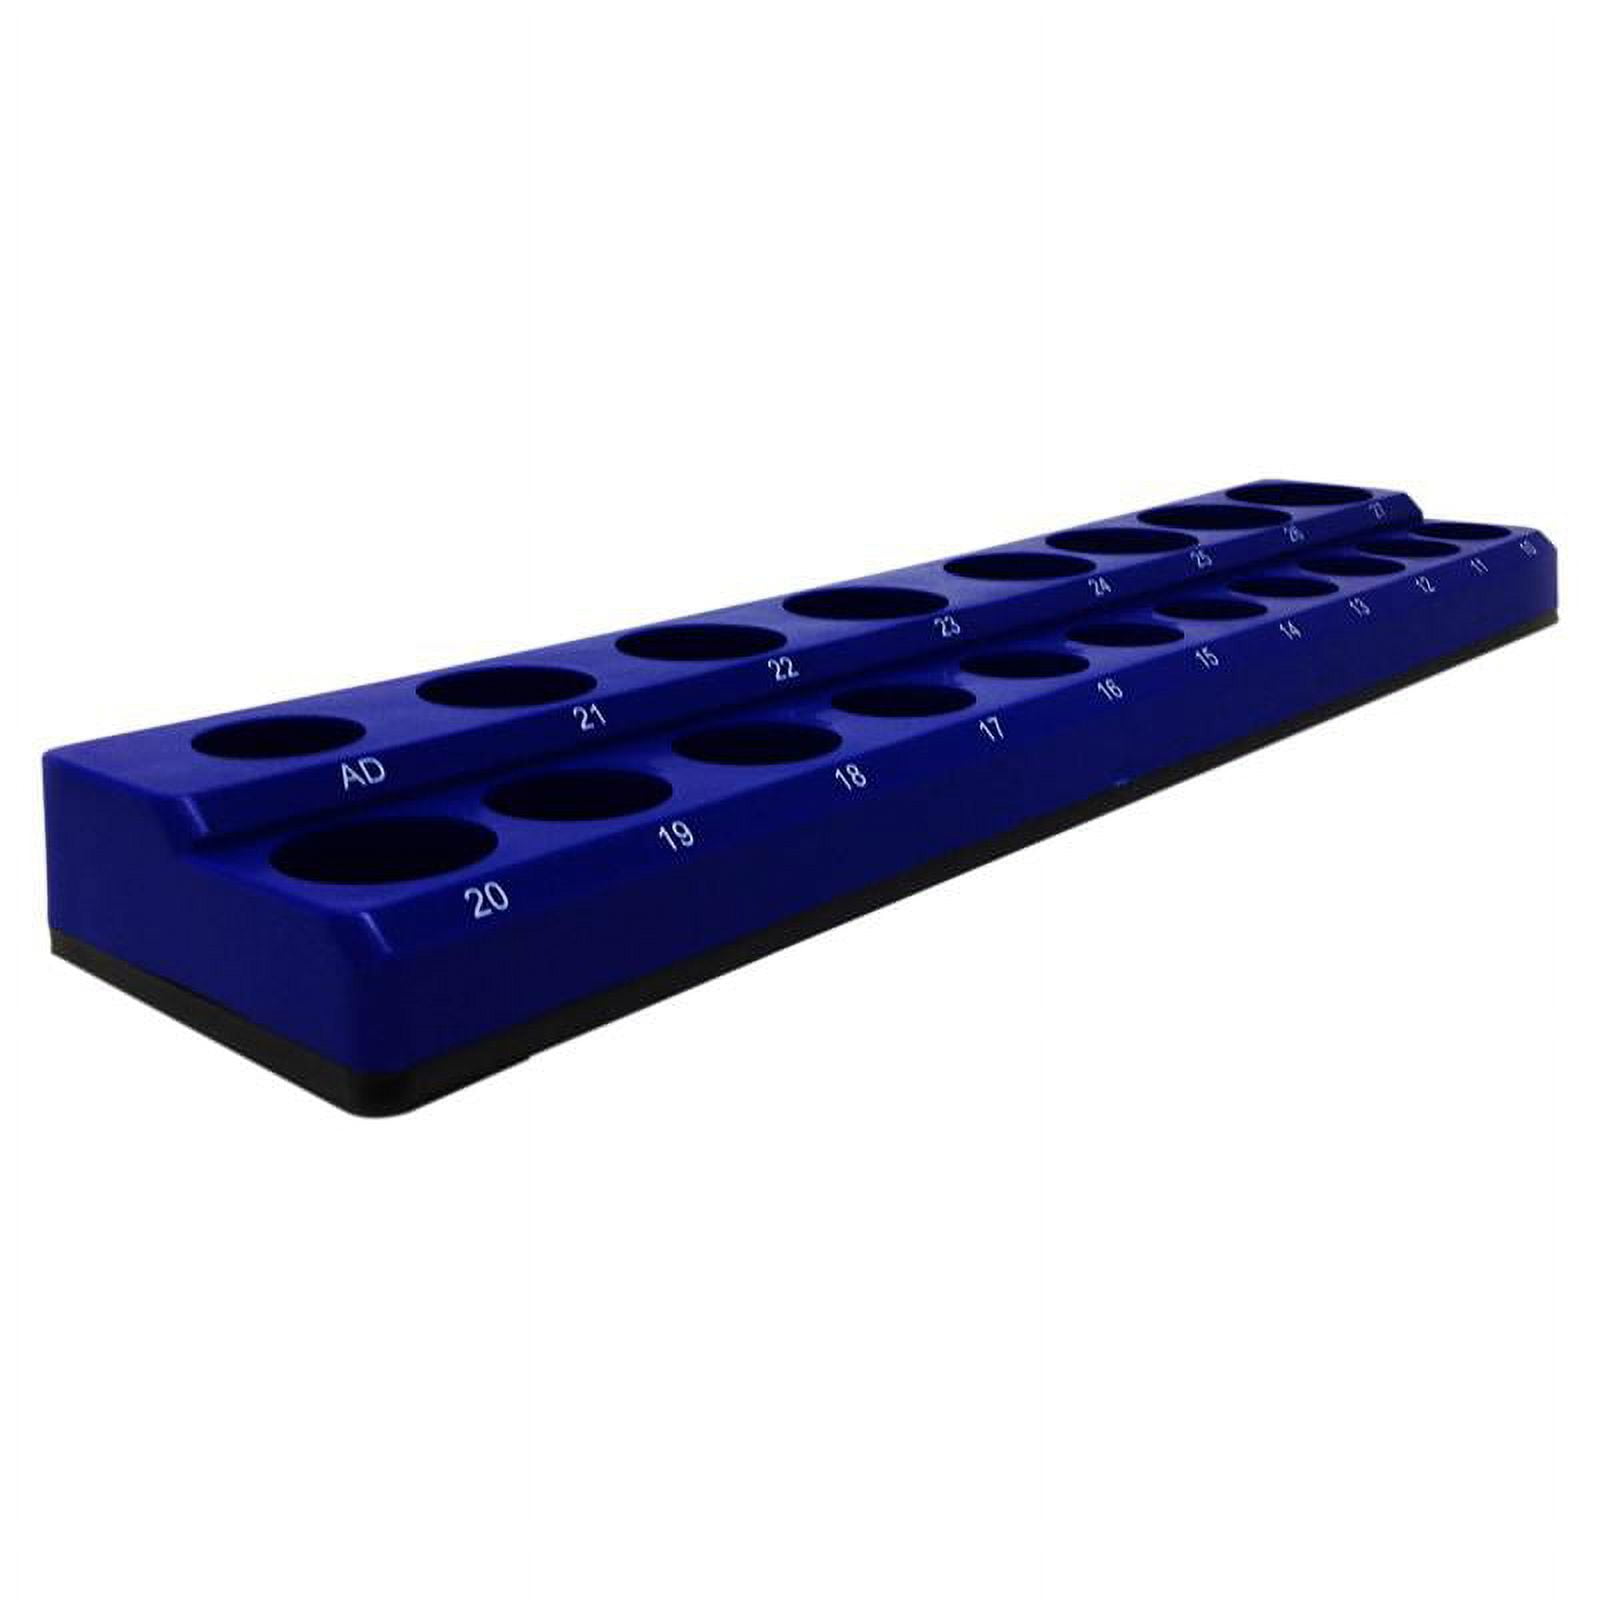 Taj Tools 1 By 2 Drive Metric Magnetic Socket Holder Tool Organizer Tray -  Blue, Holds 18 Sockets And 1 Socket Adaptor